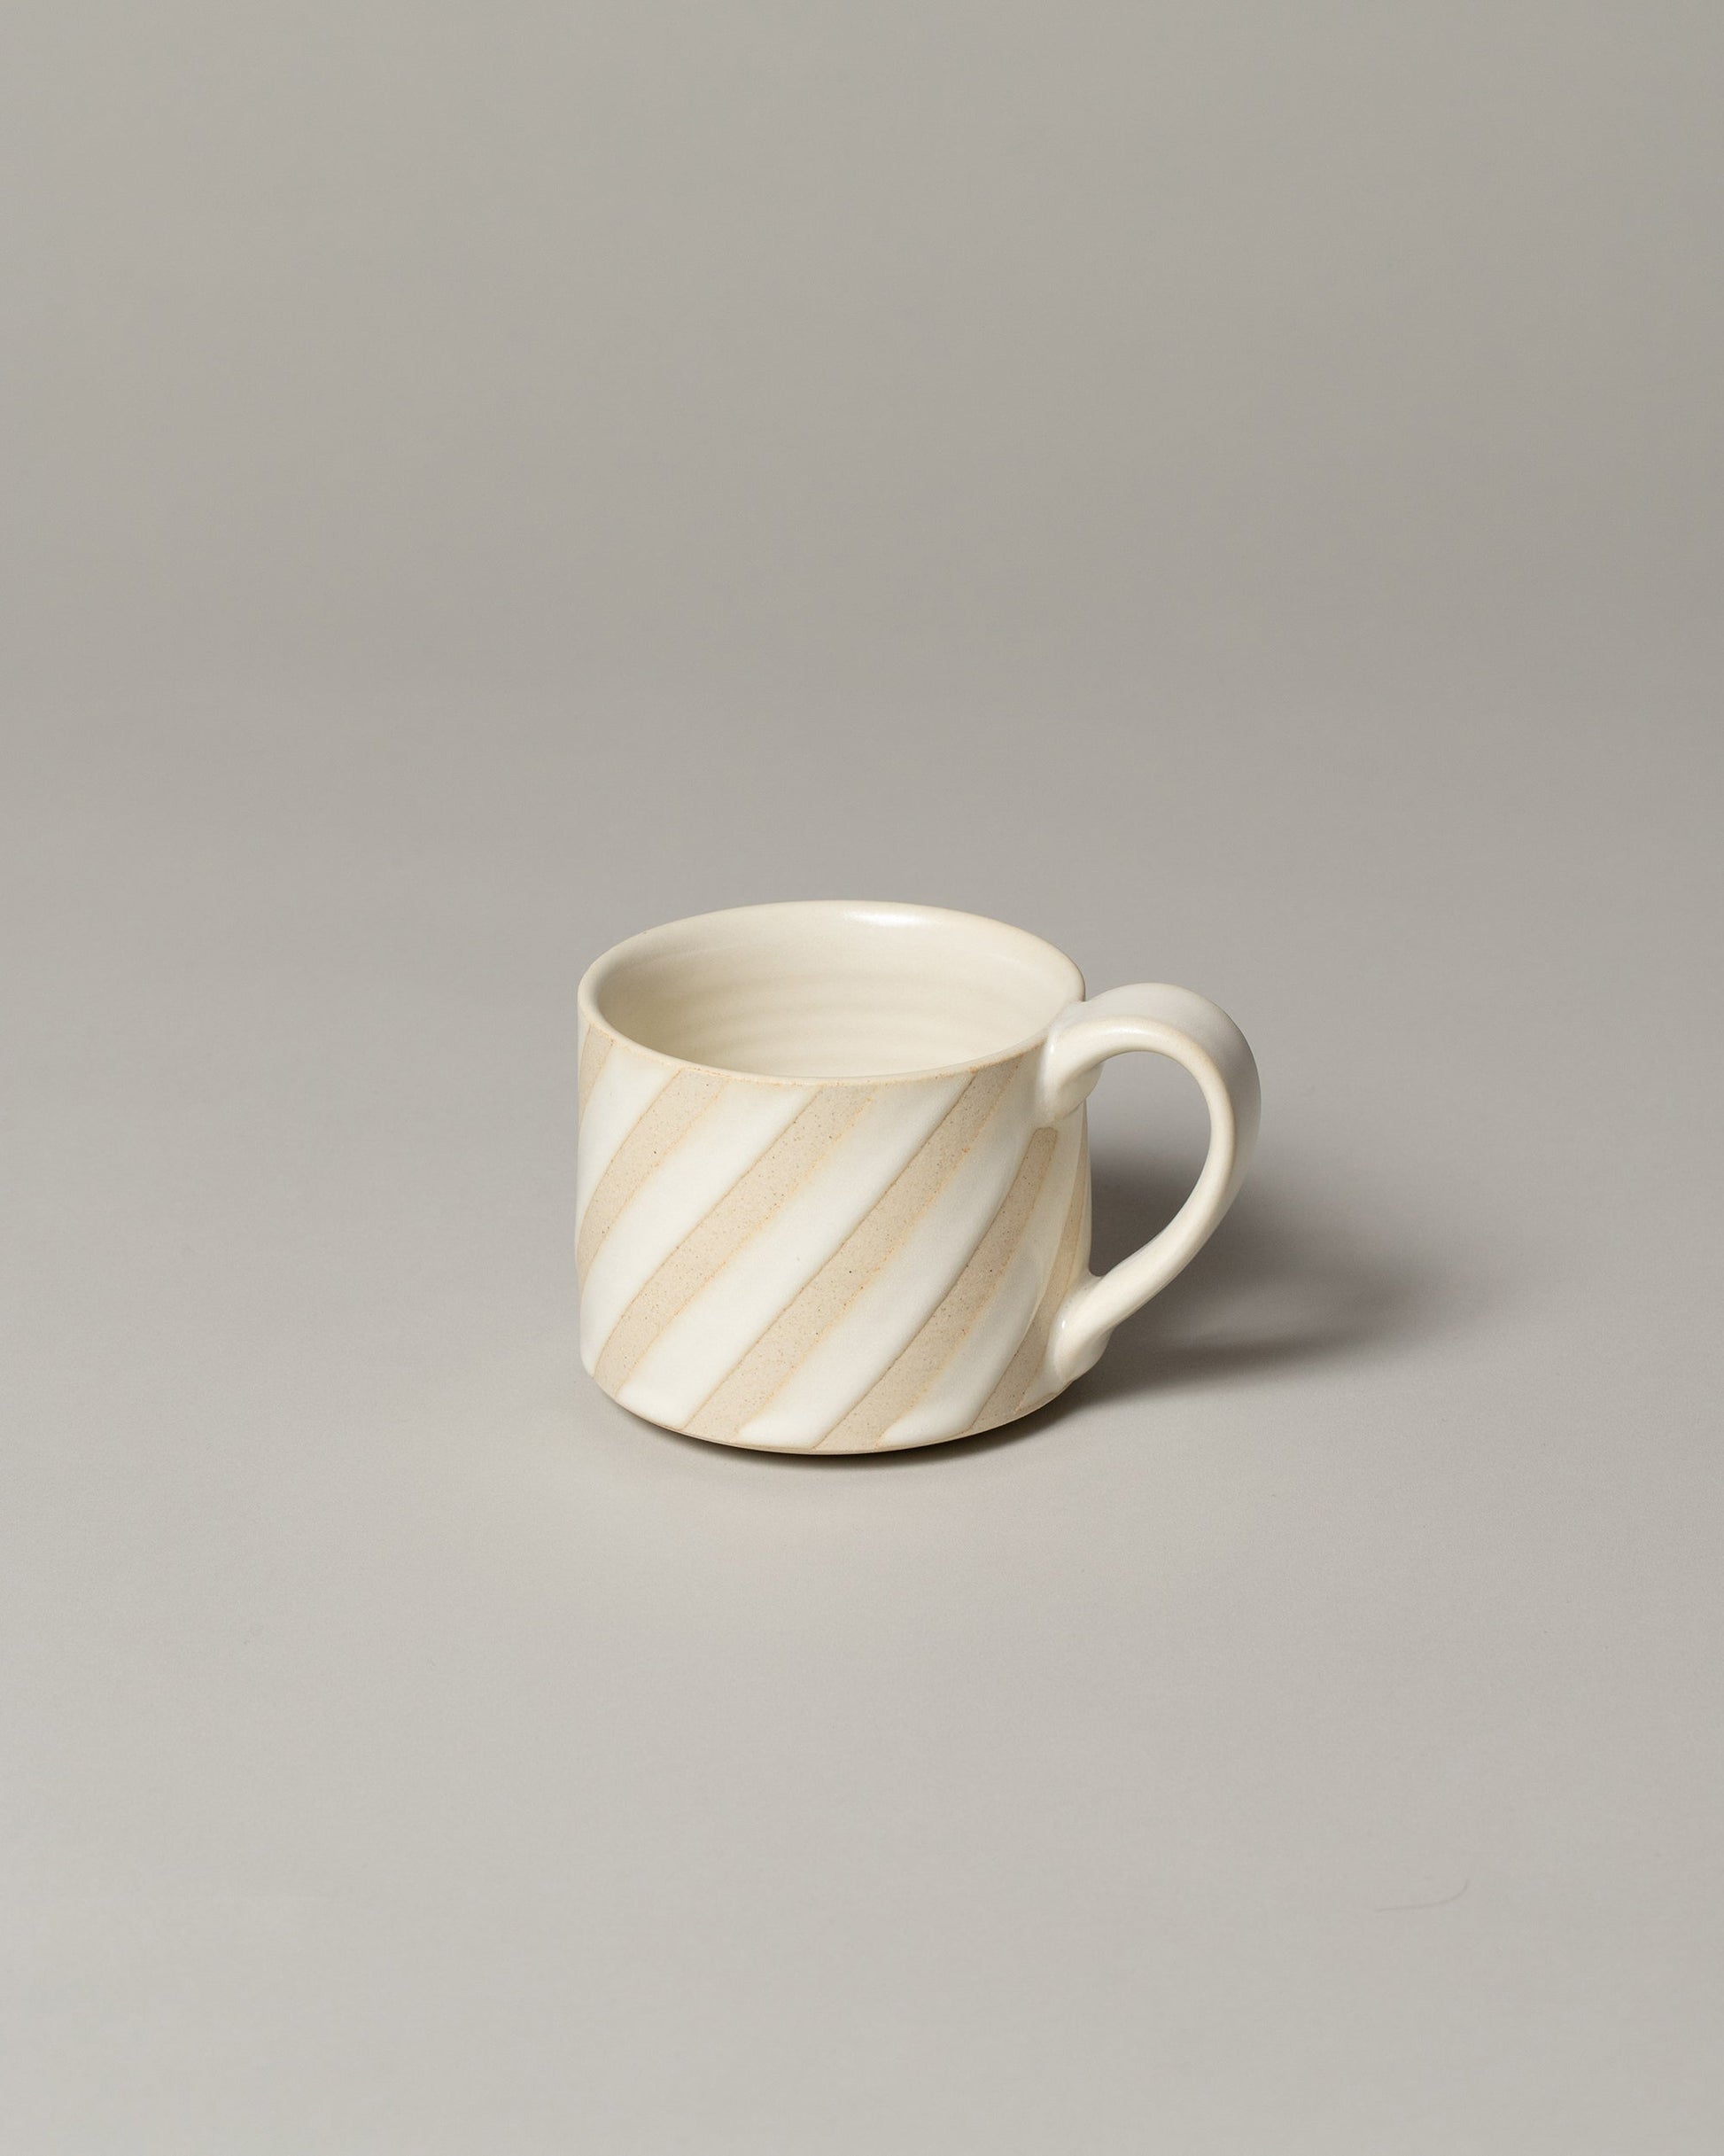 Jeremy Ayers White Diagonal Striped Mug on light color background.